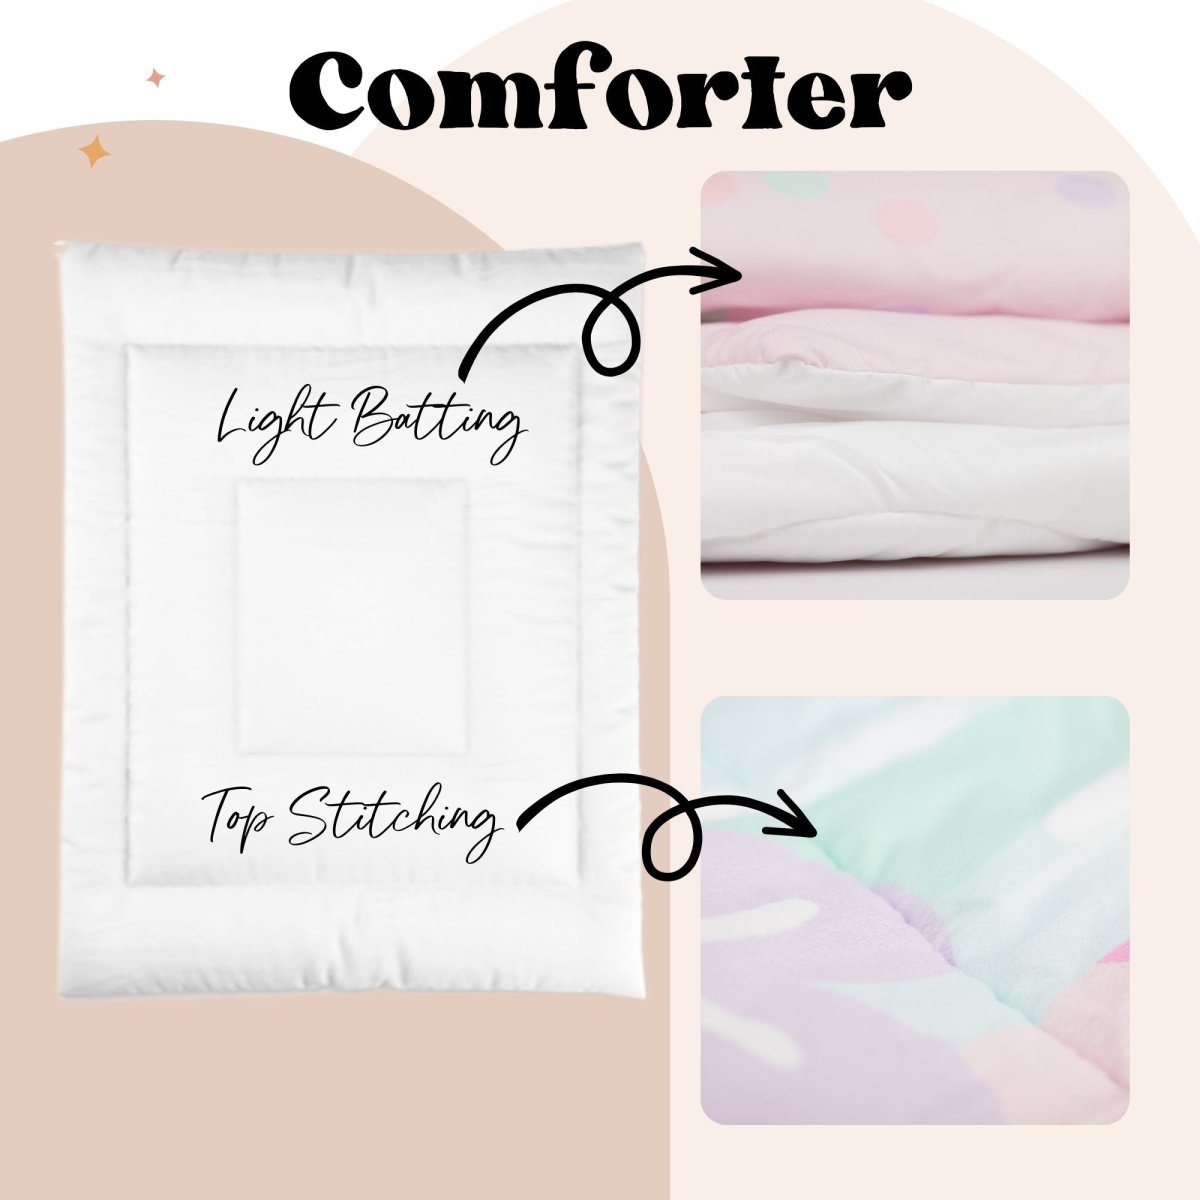 Tropical Floral Personalized Kids Bedding Set (Comforter or Duvet Cover) - gender_girl, text, Theme_Floral